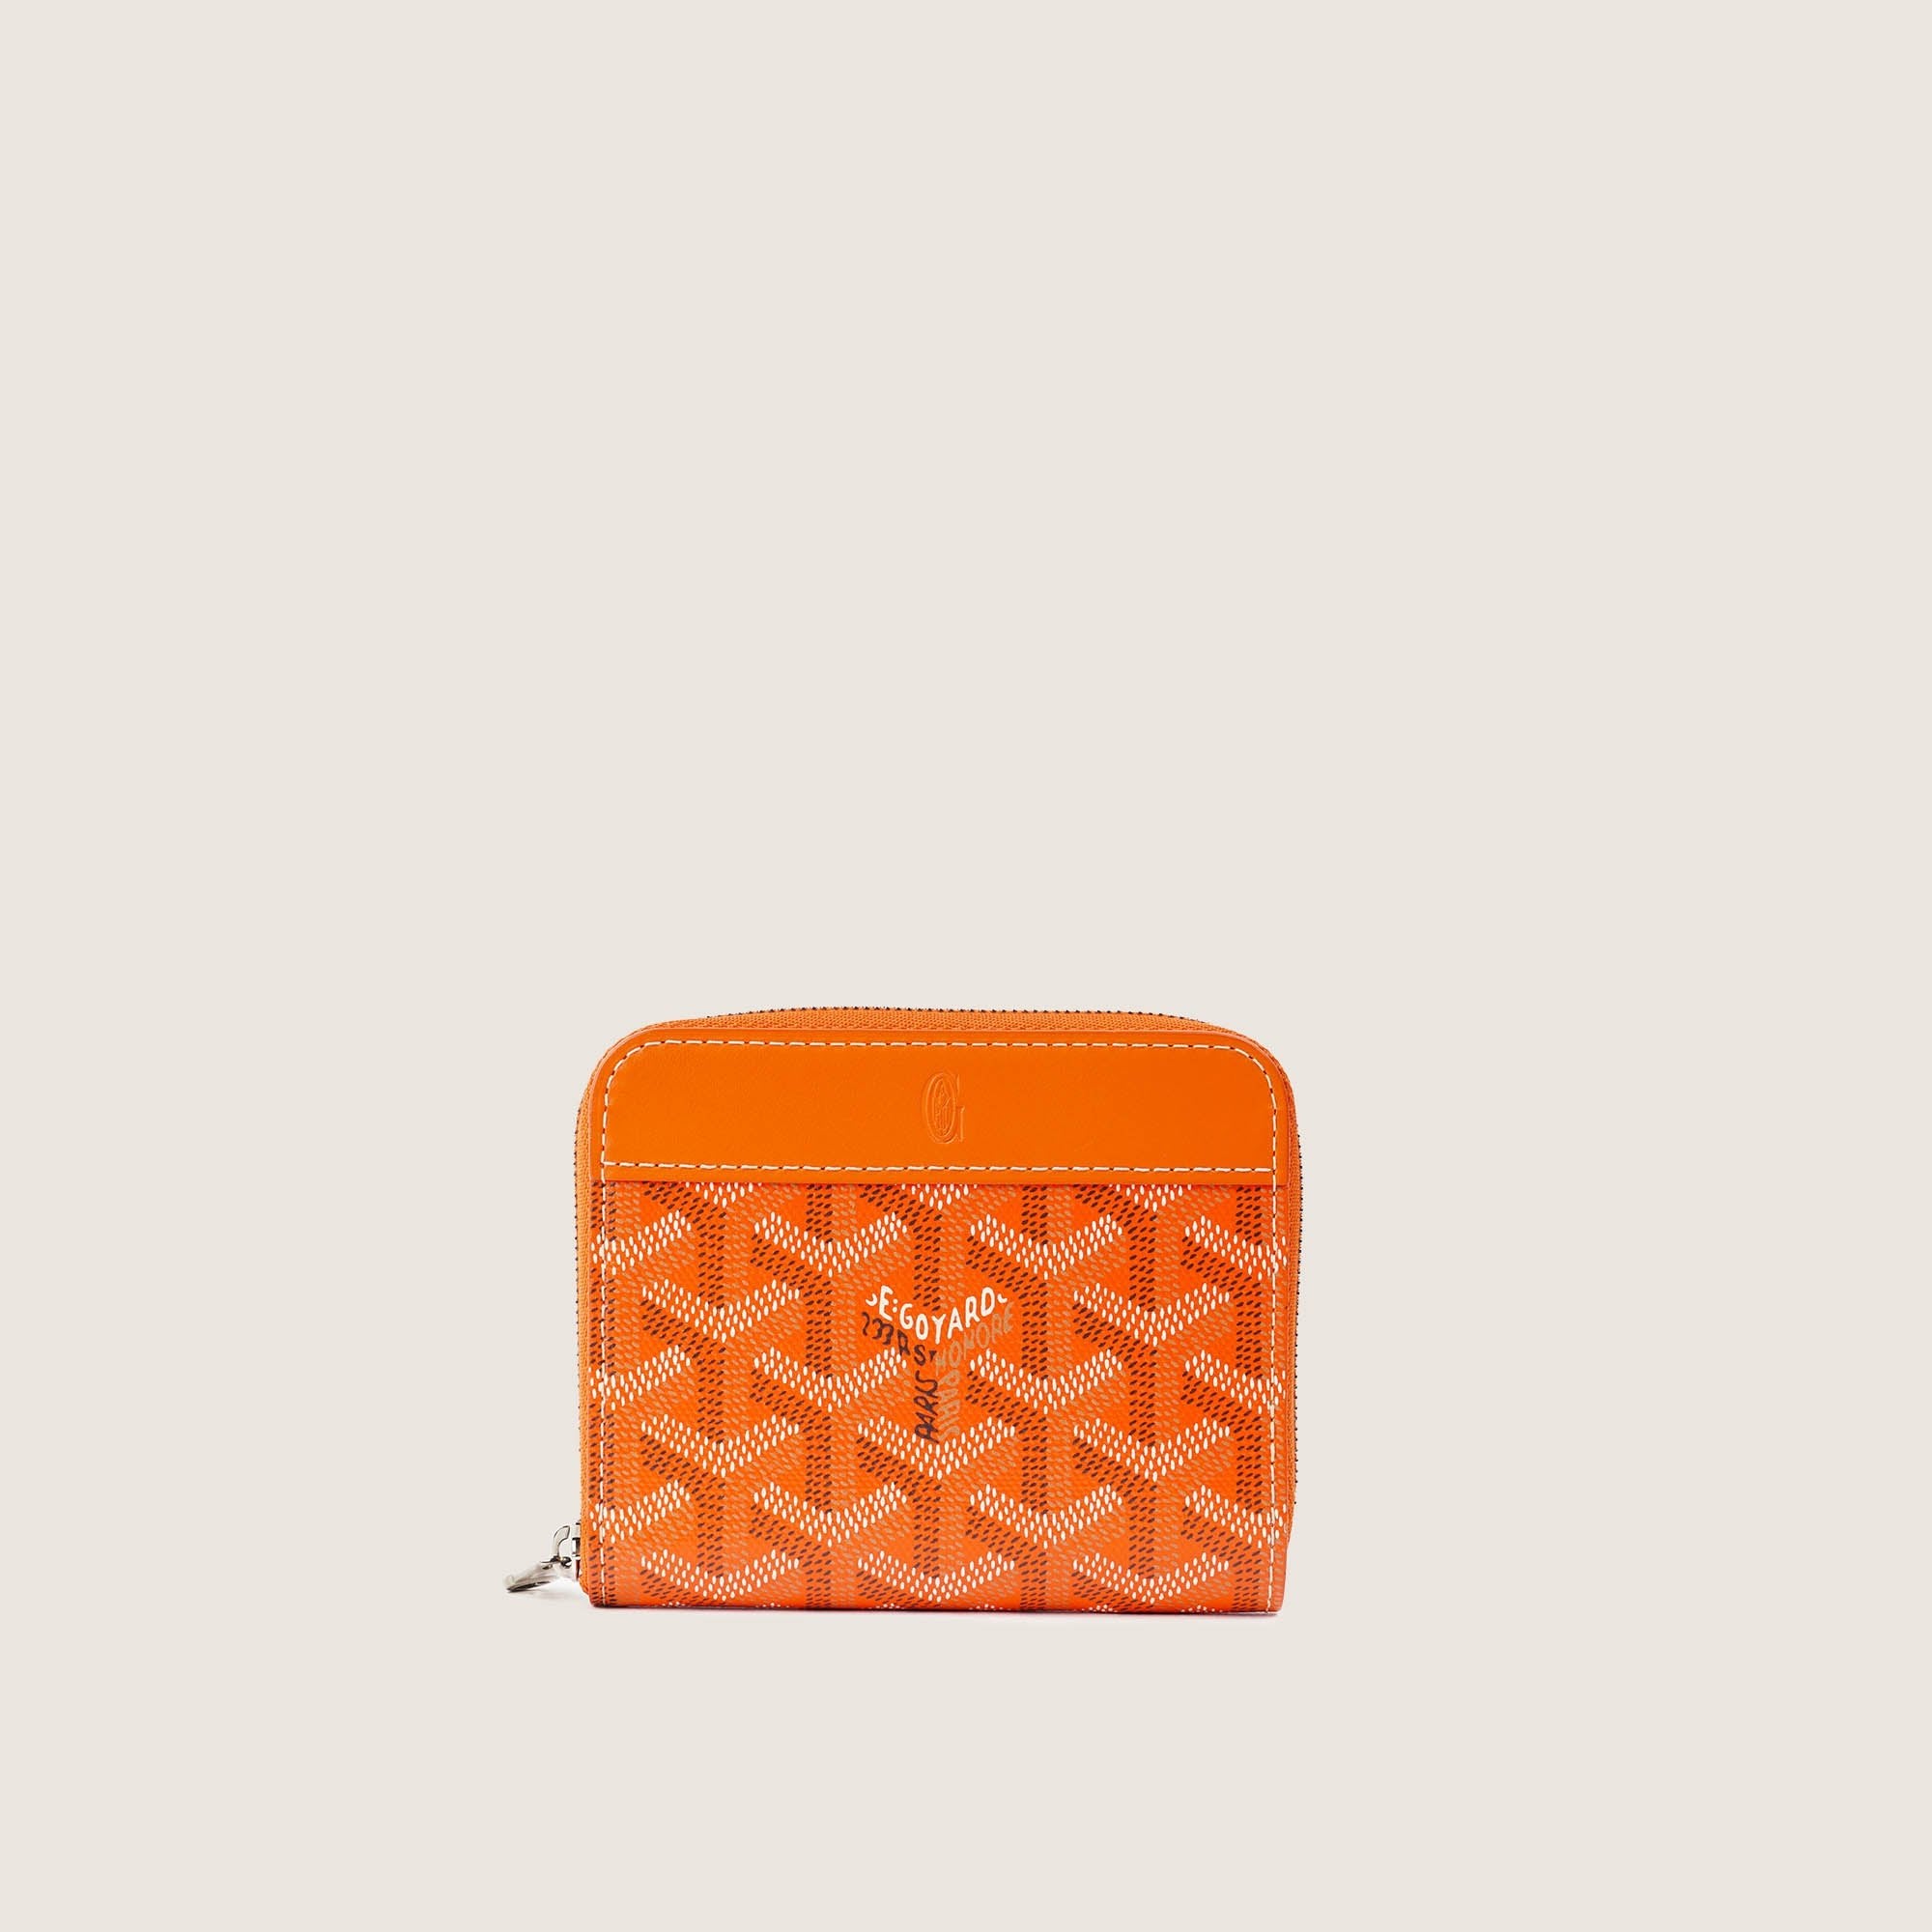 Matignon PM Wallet - GOYARD - Affordable Luxury image